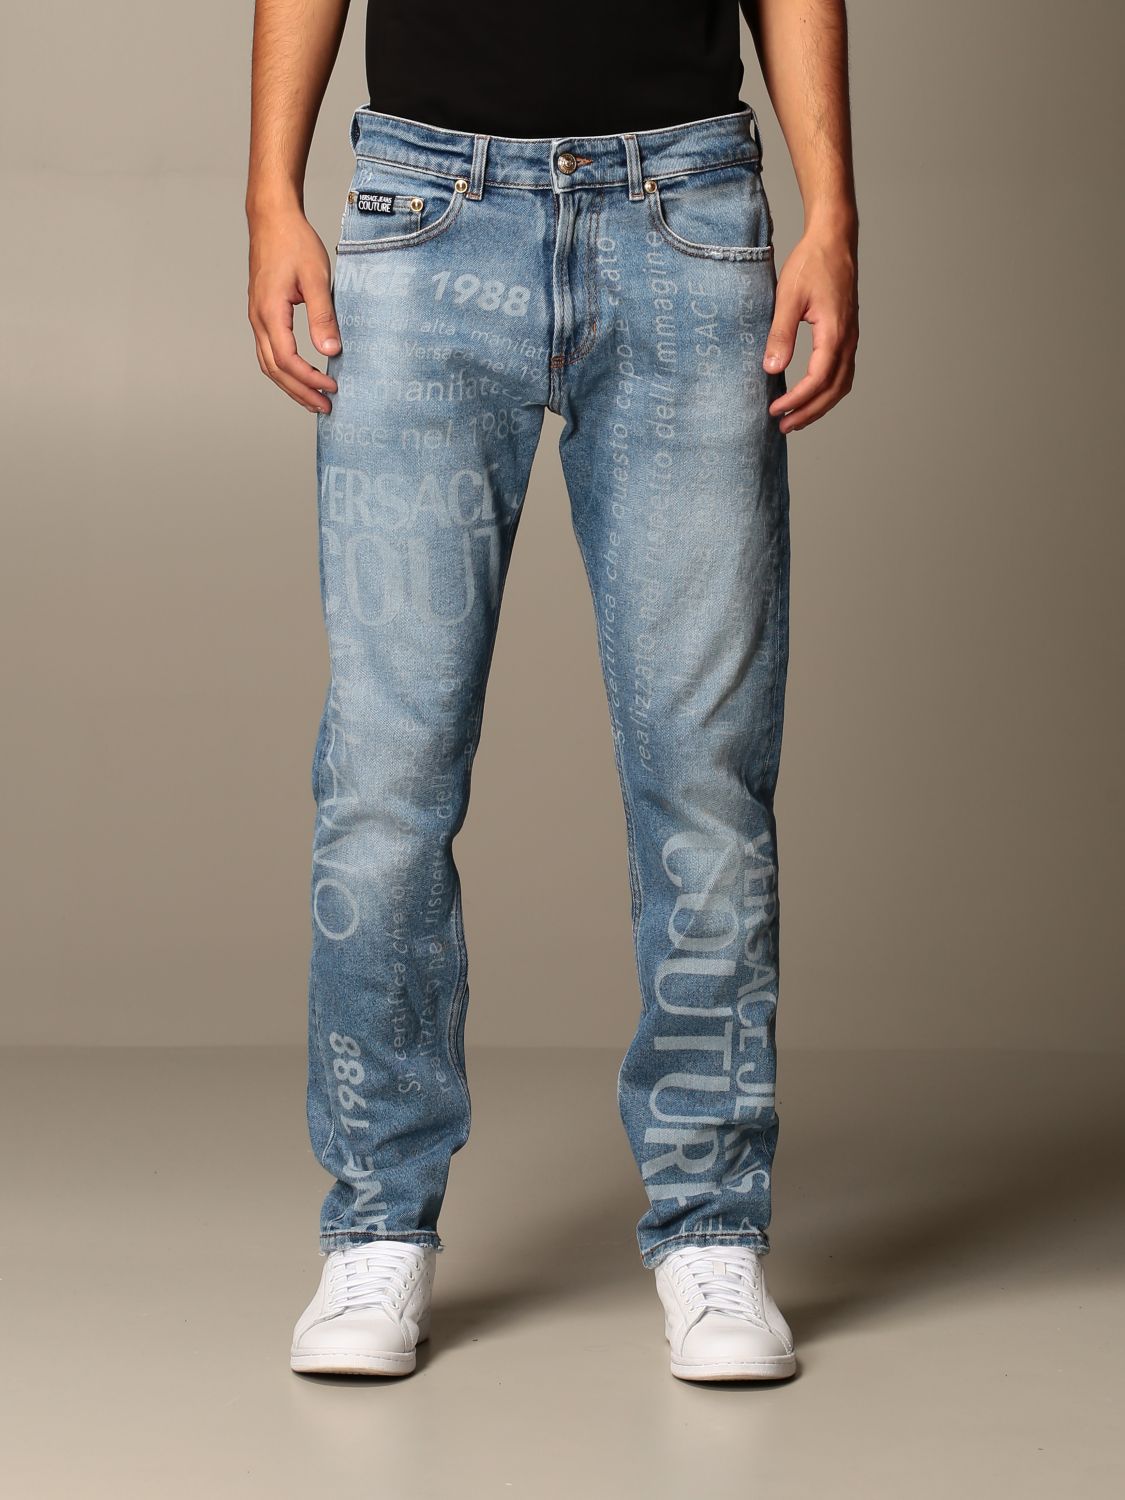 versace denim jeans